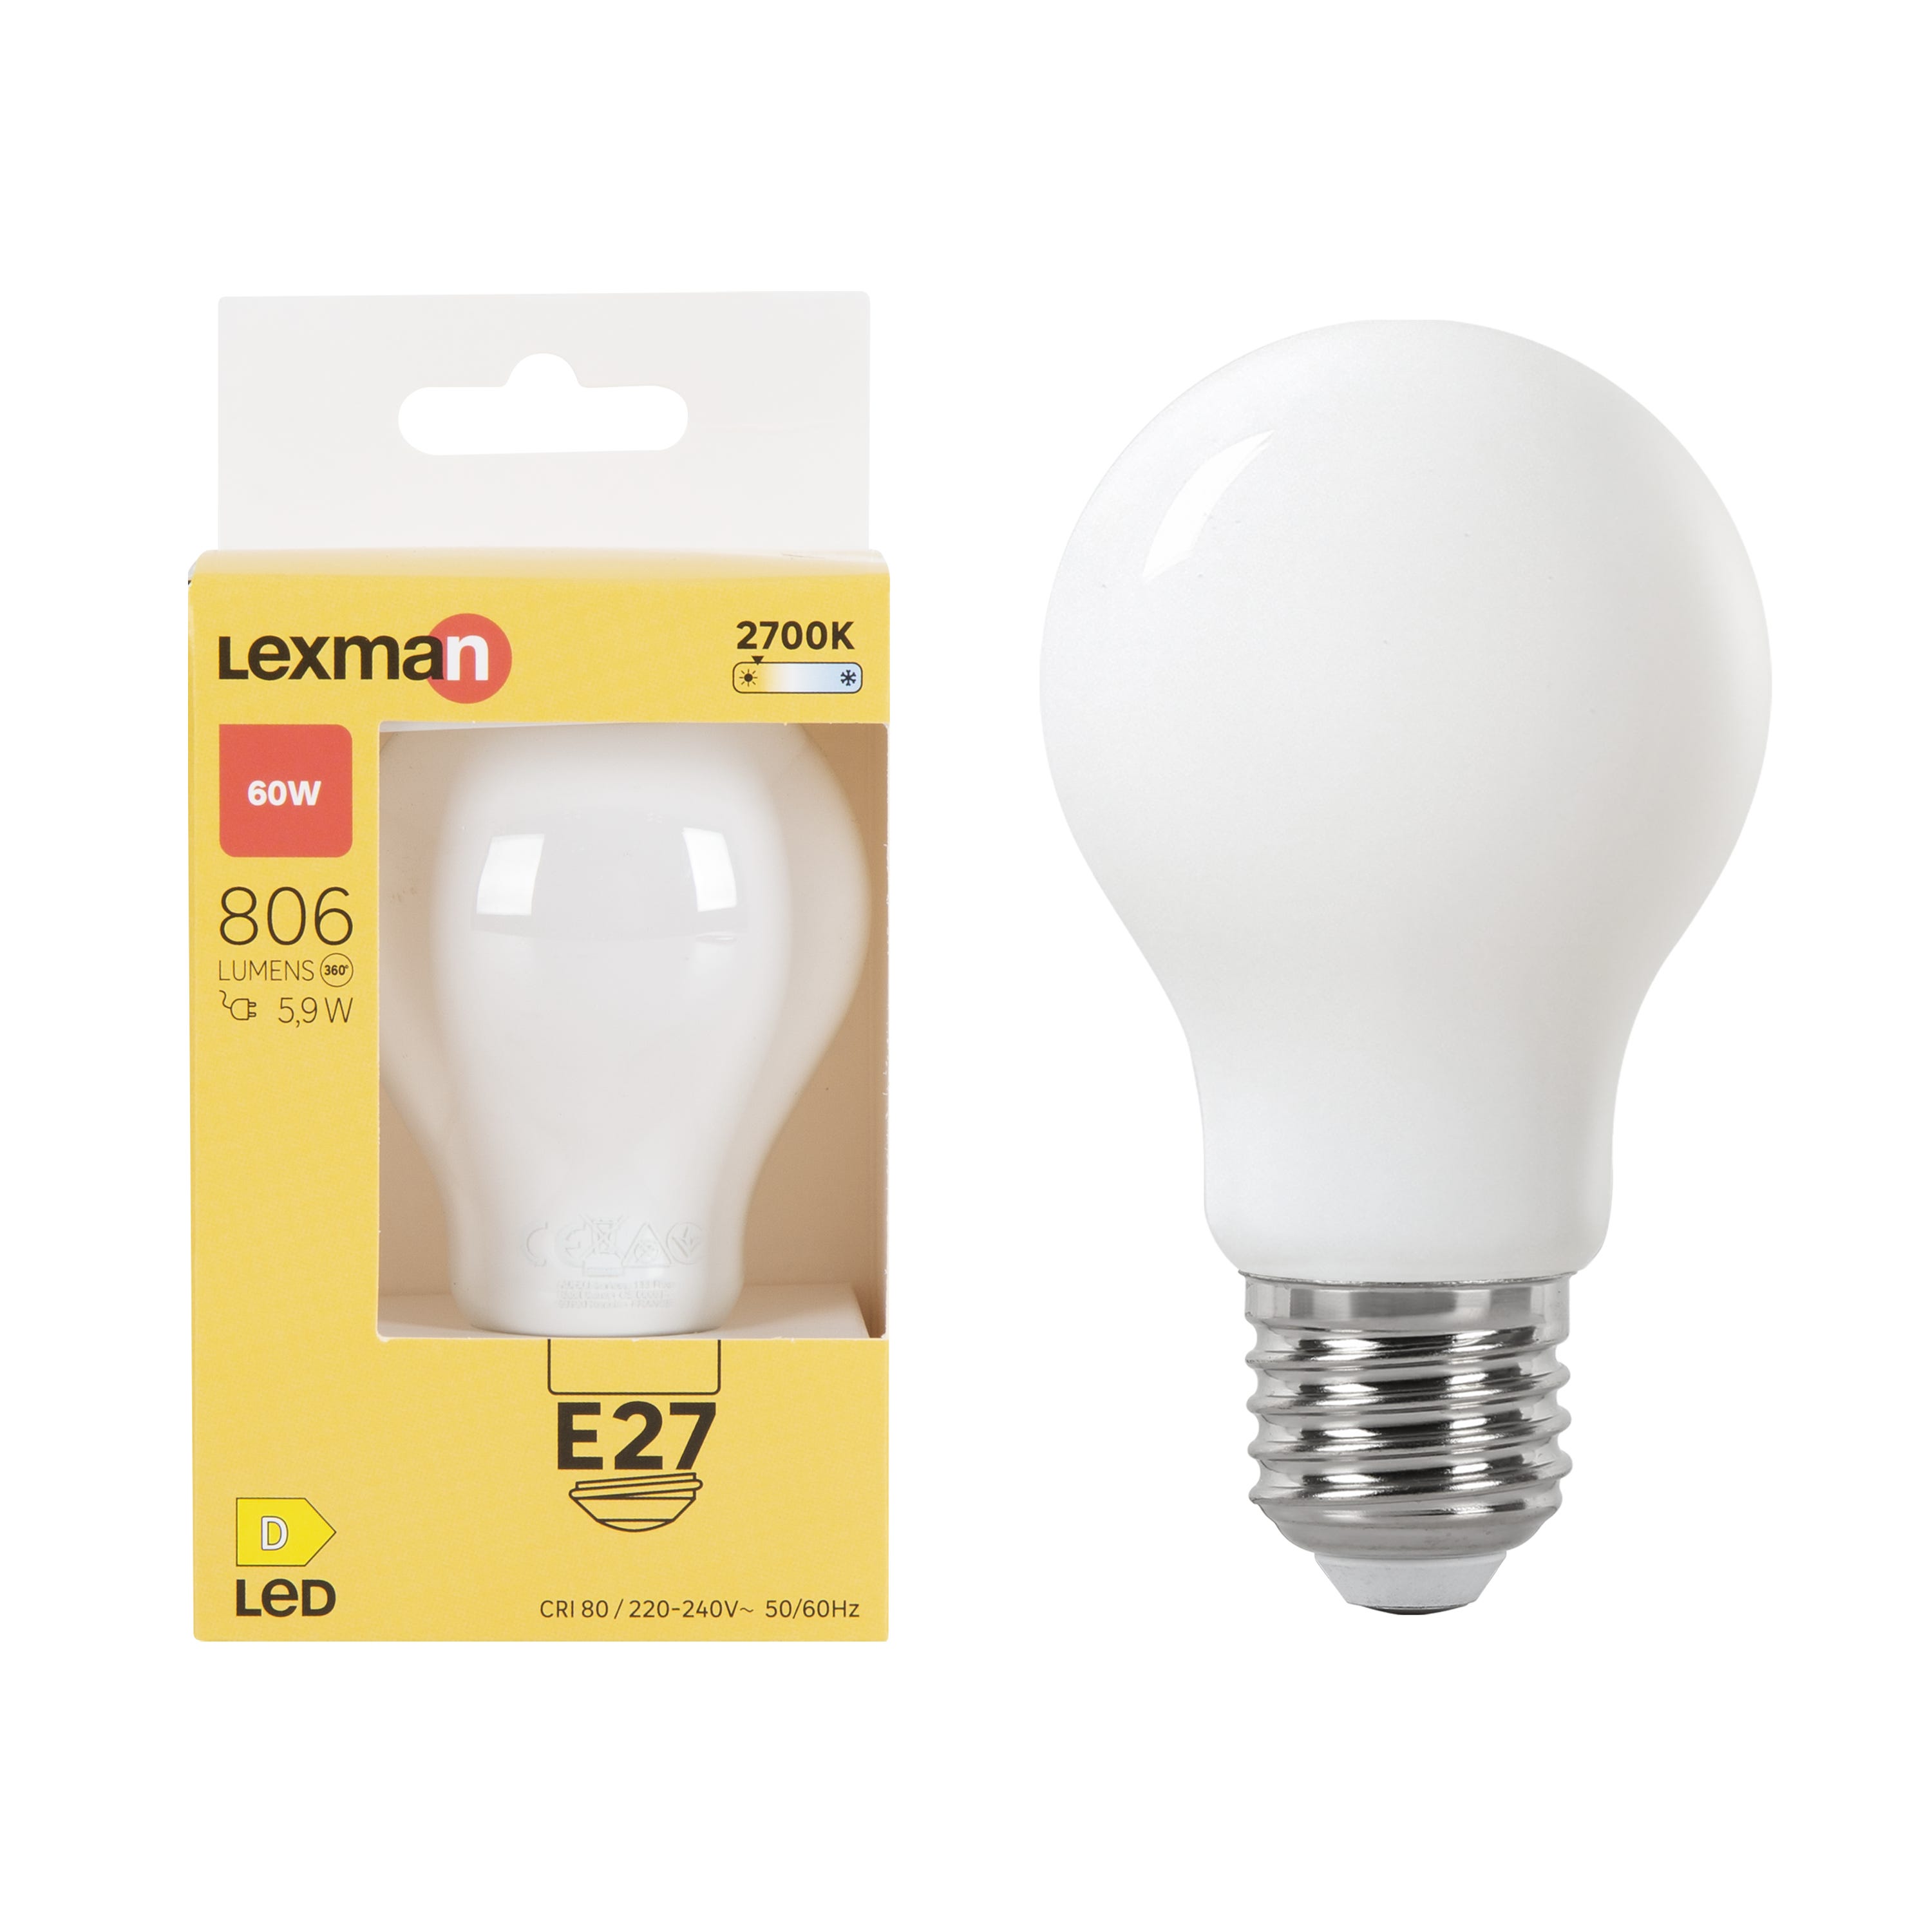 Bombilla LED E14 esférica 470 lm blanco cálido mate Lexman